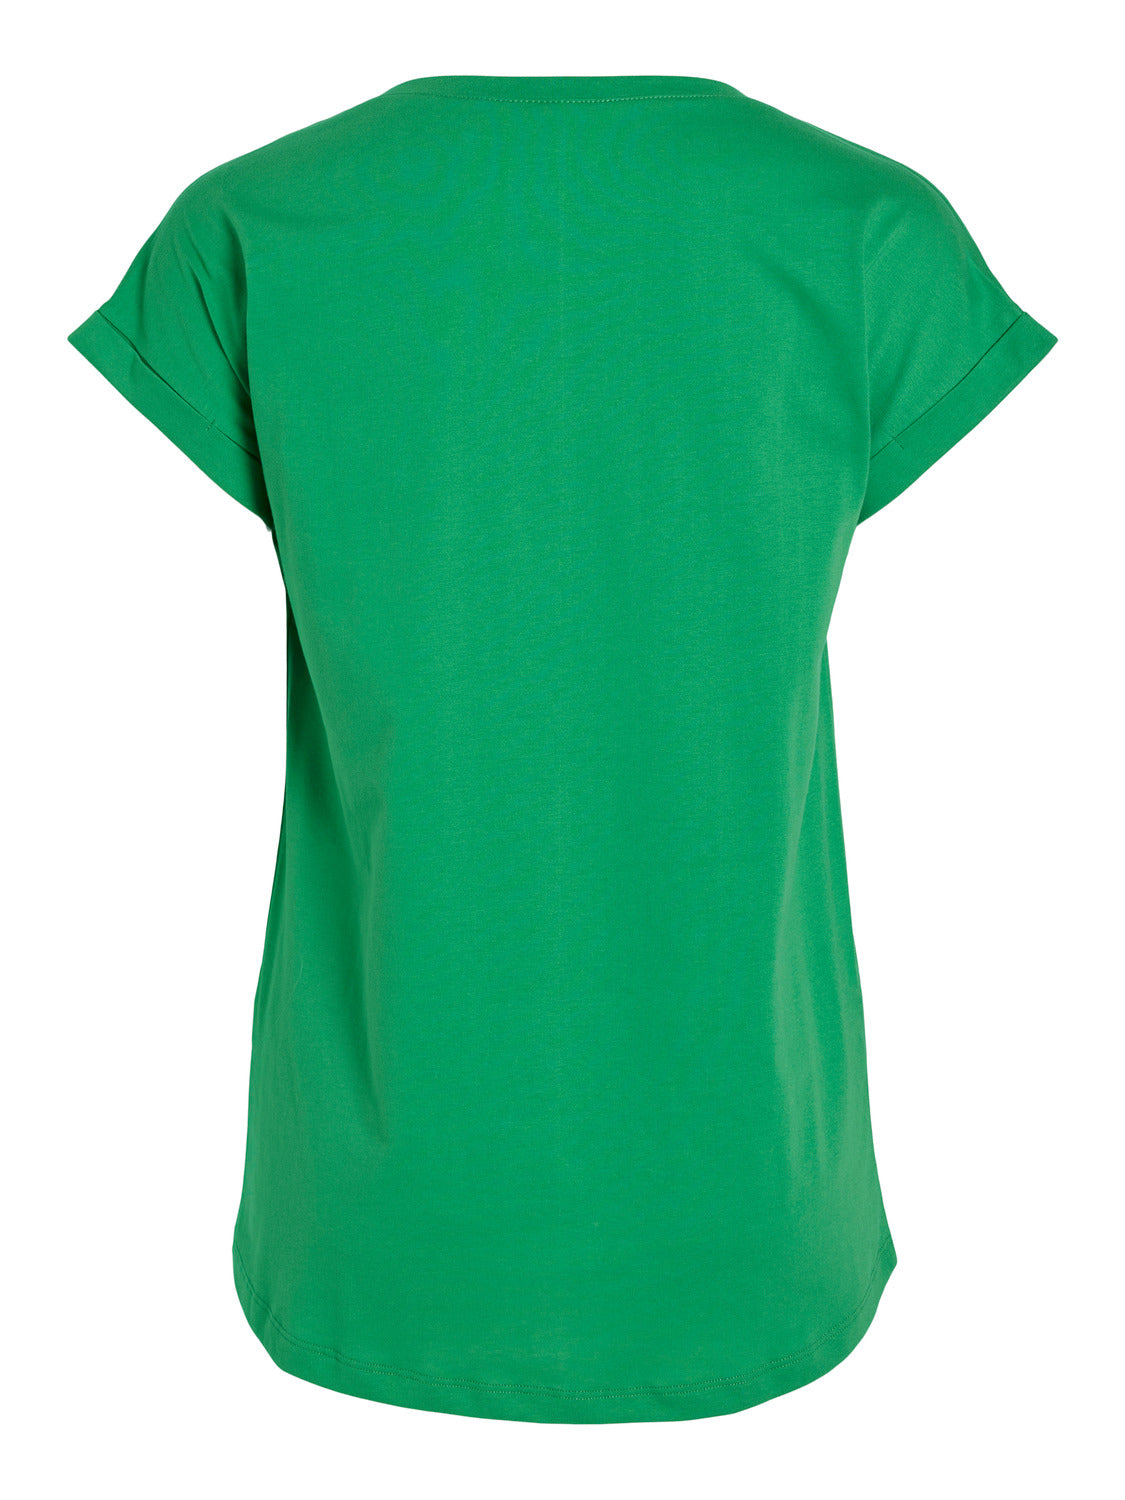 VIDREAMERS T-Shirts & Tops - Bright Green